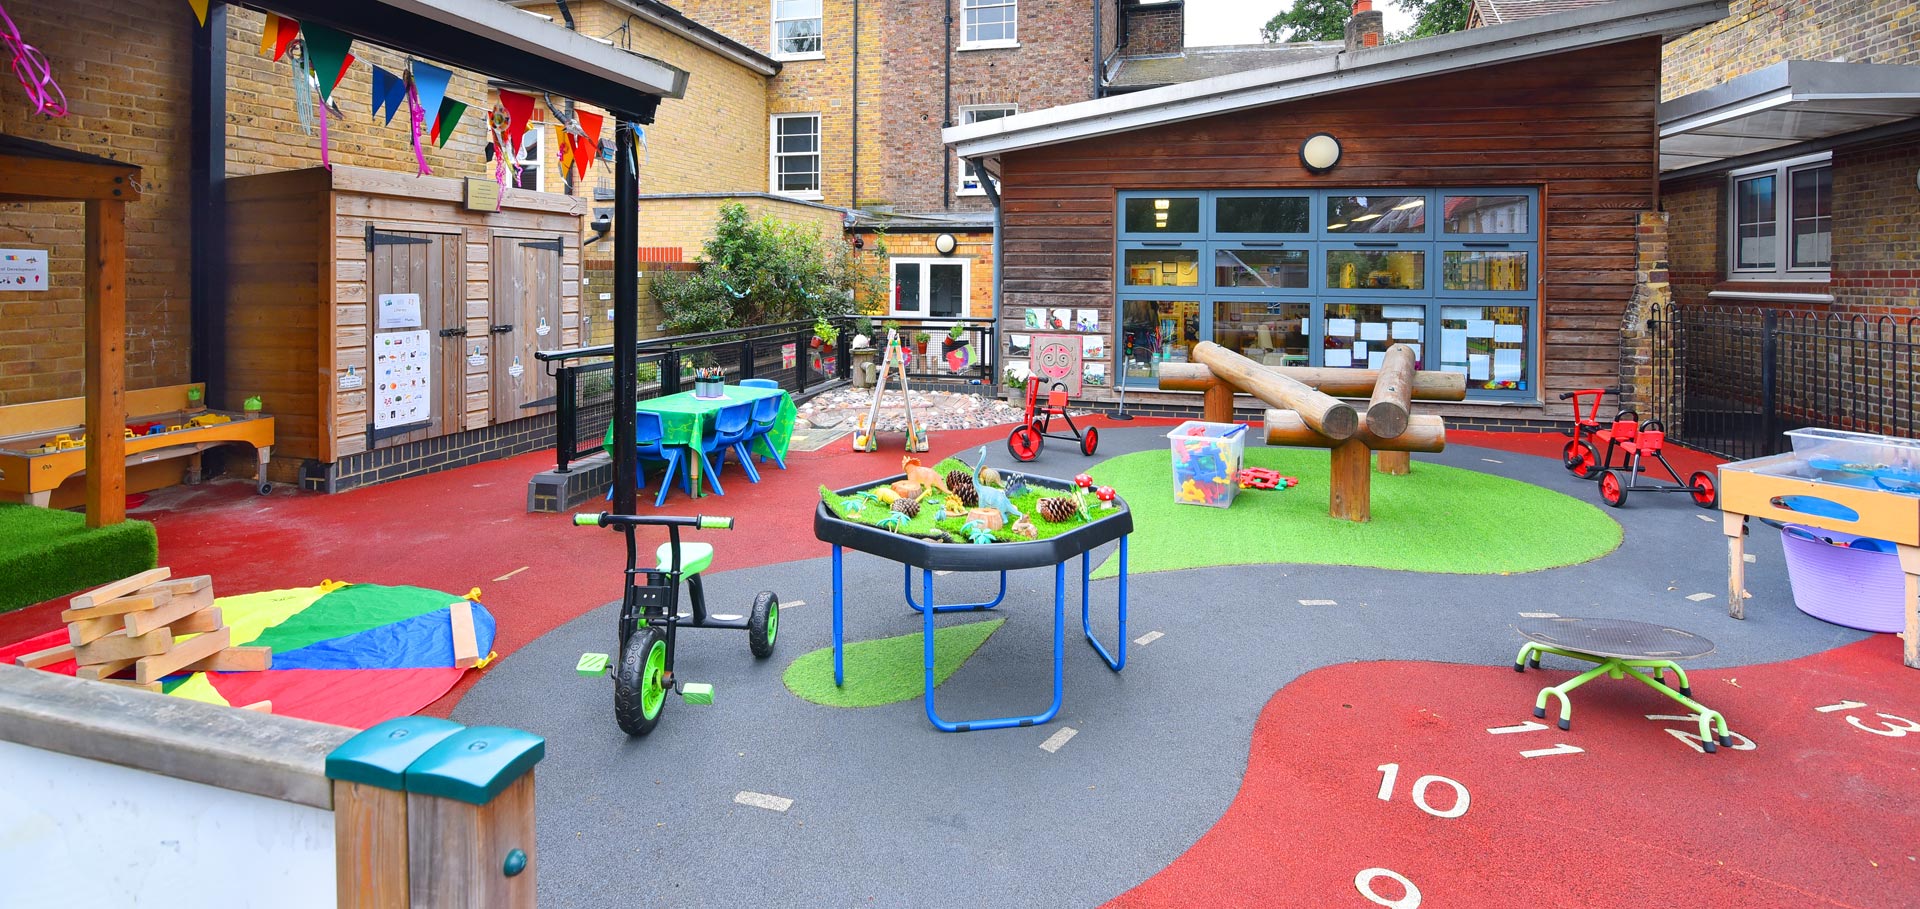 St Mary's Preschool in Twickenham